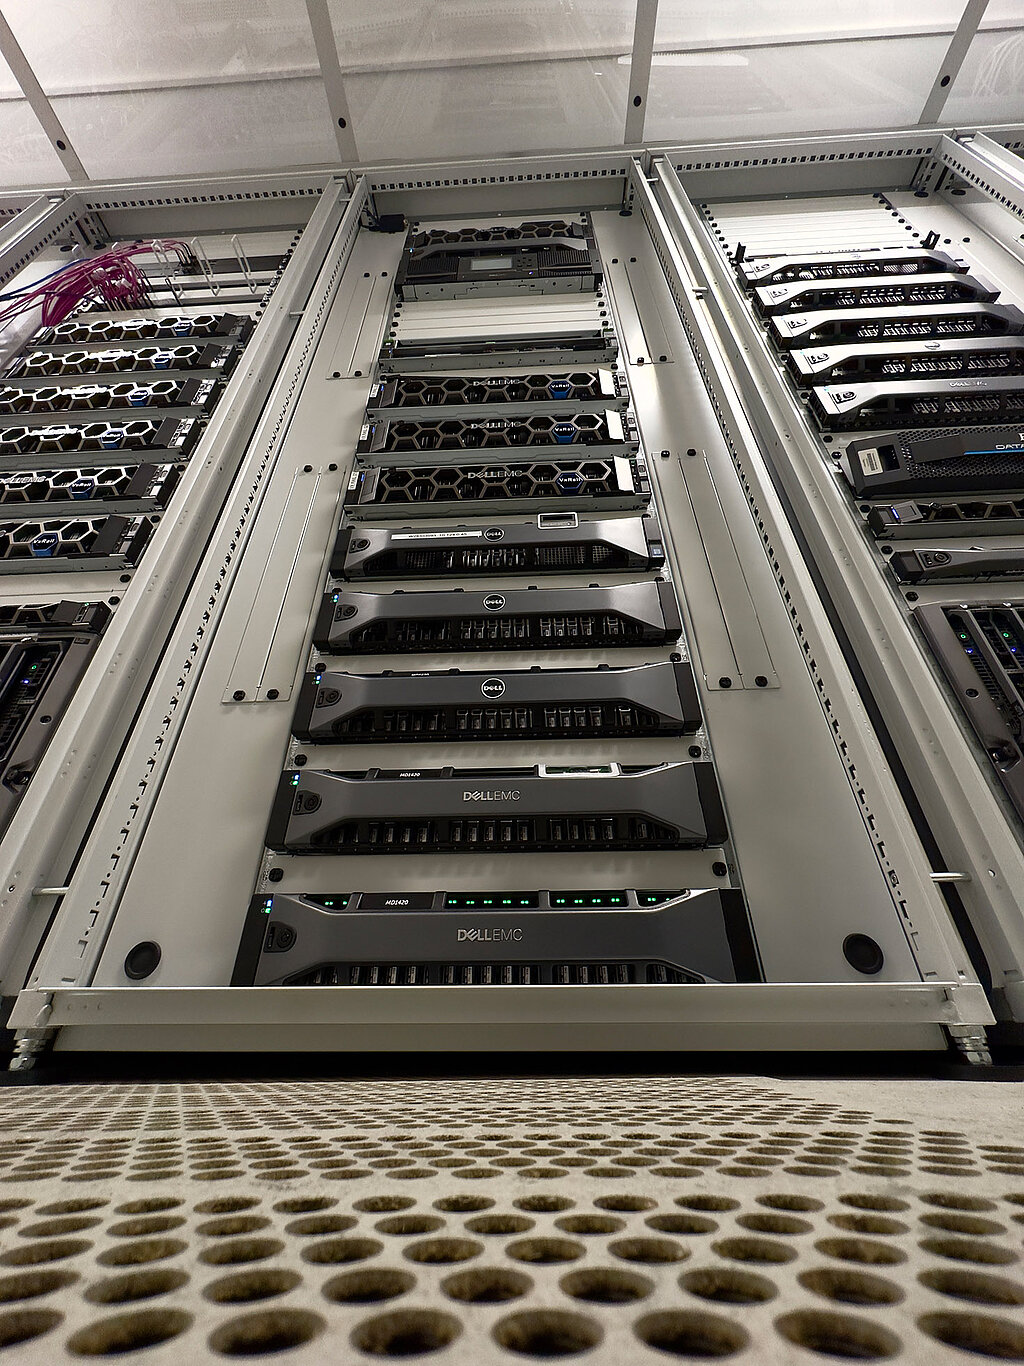 Server rack, view from below